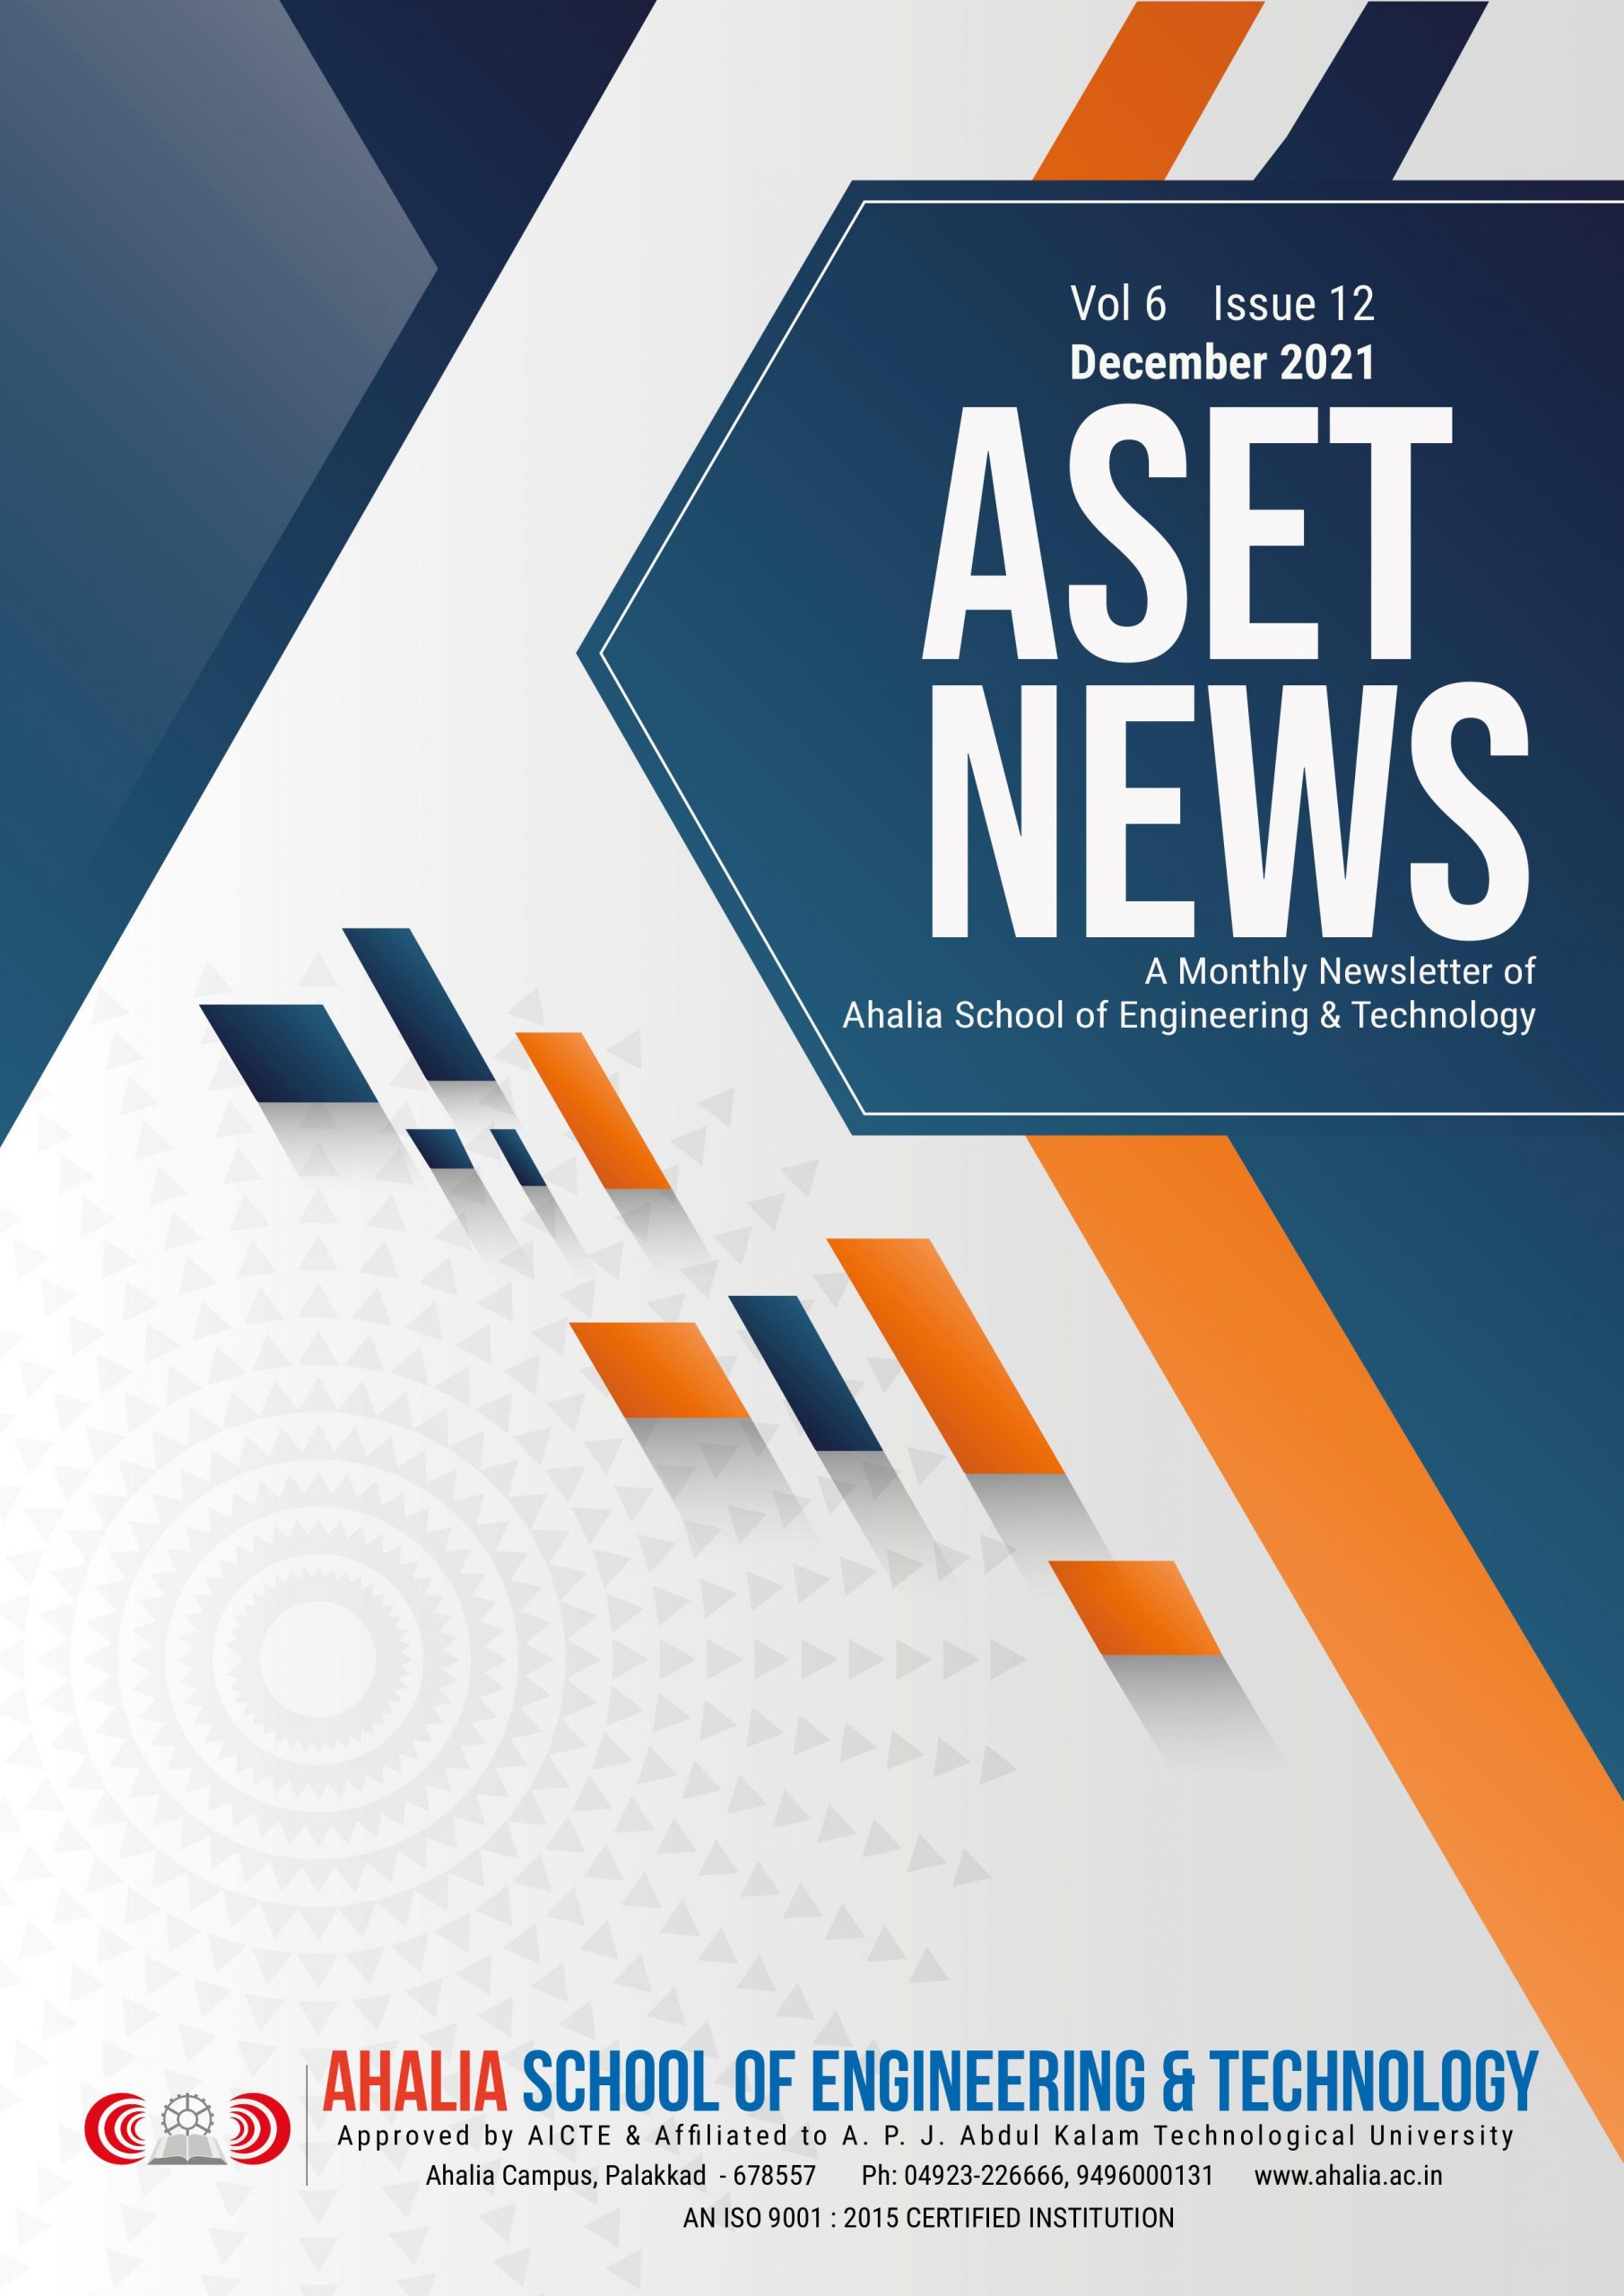 December 2021 ASET NEWS Released